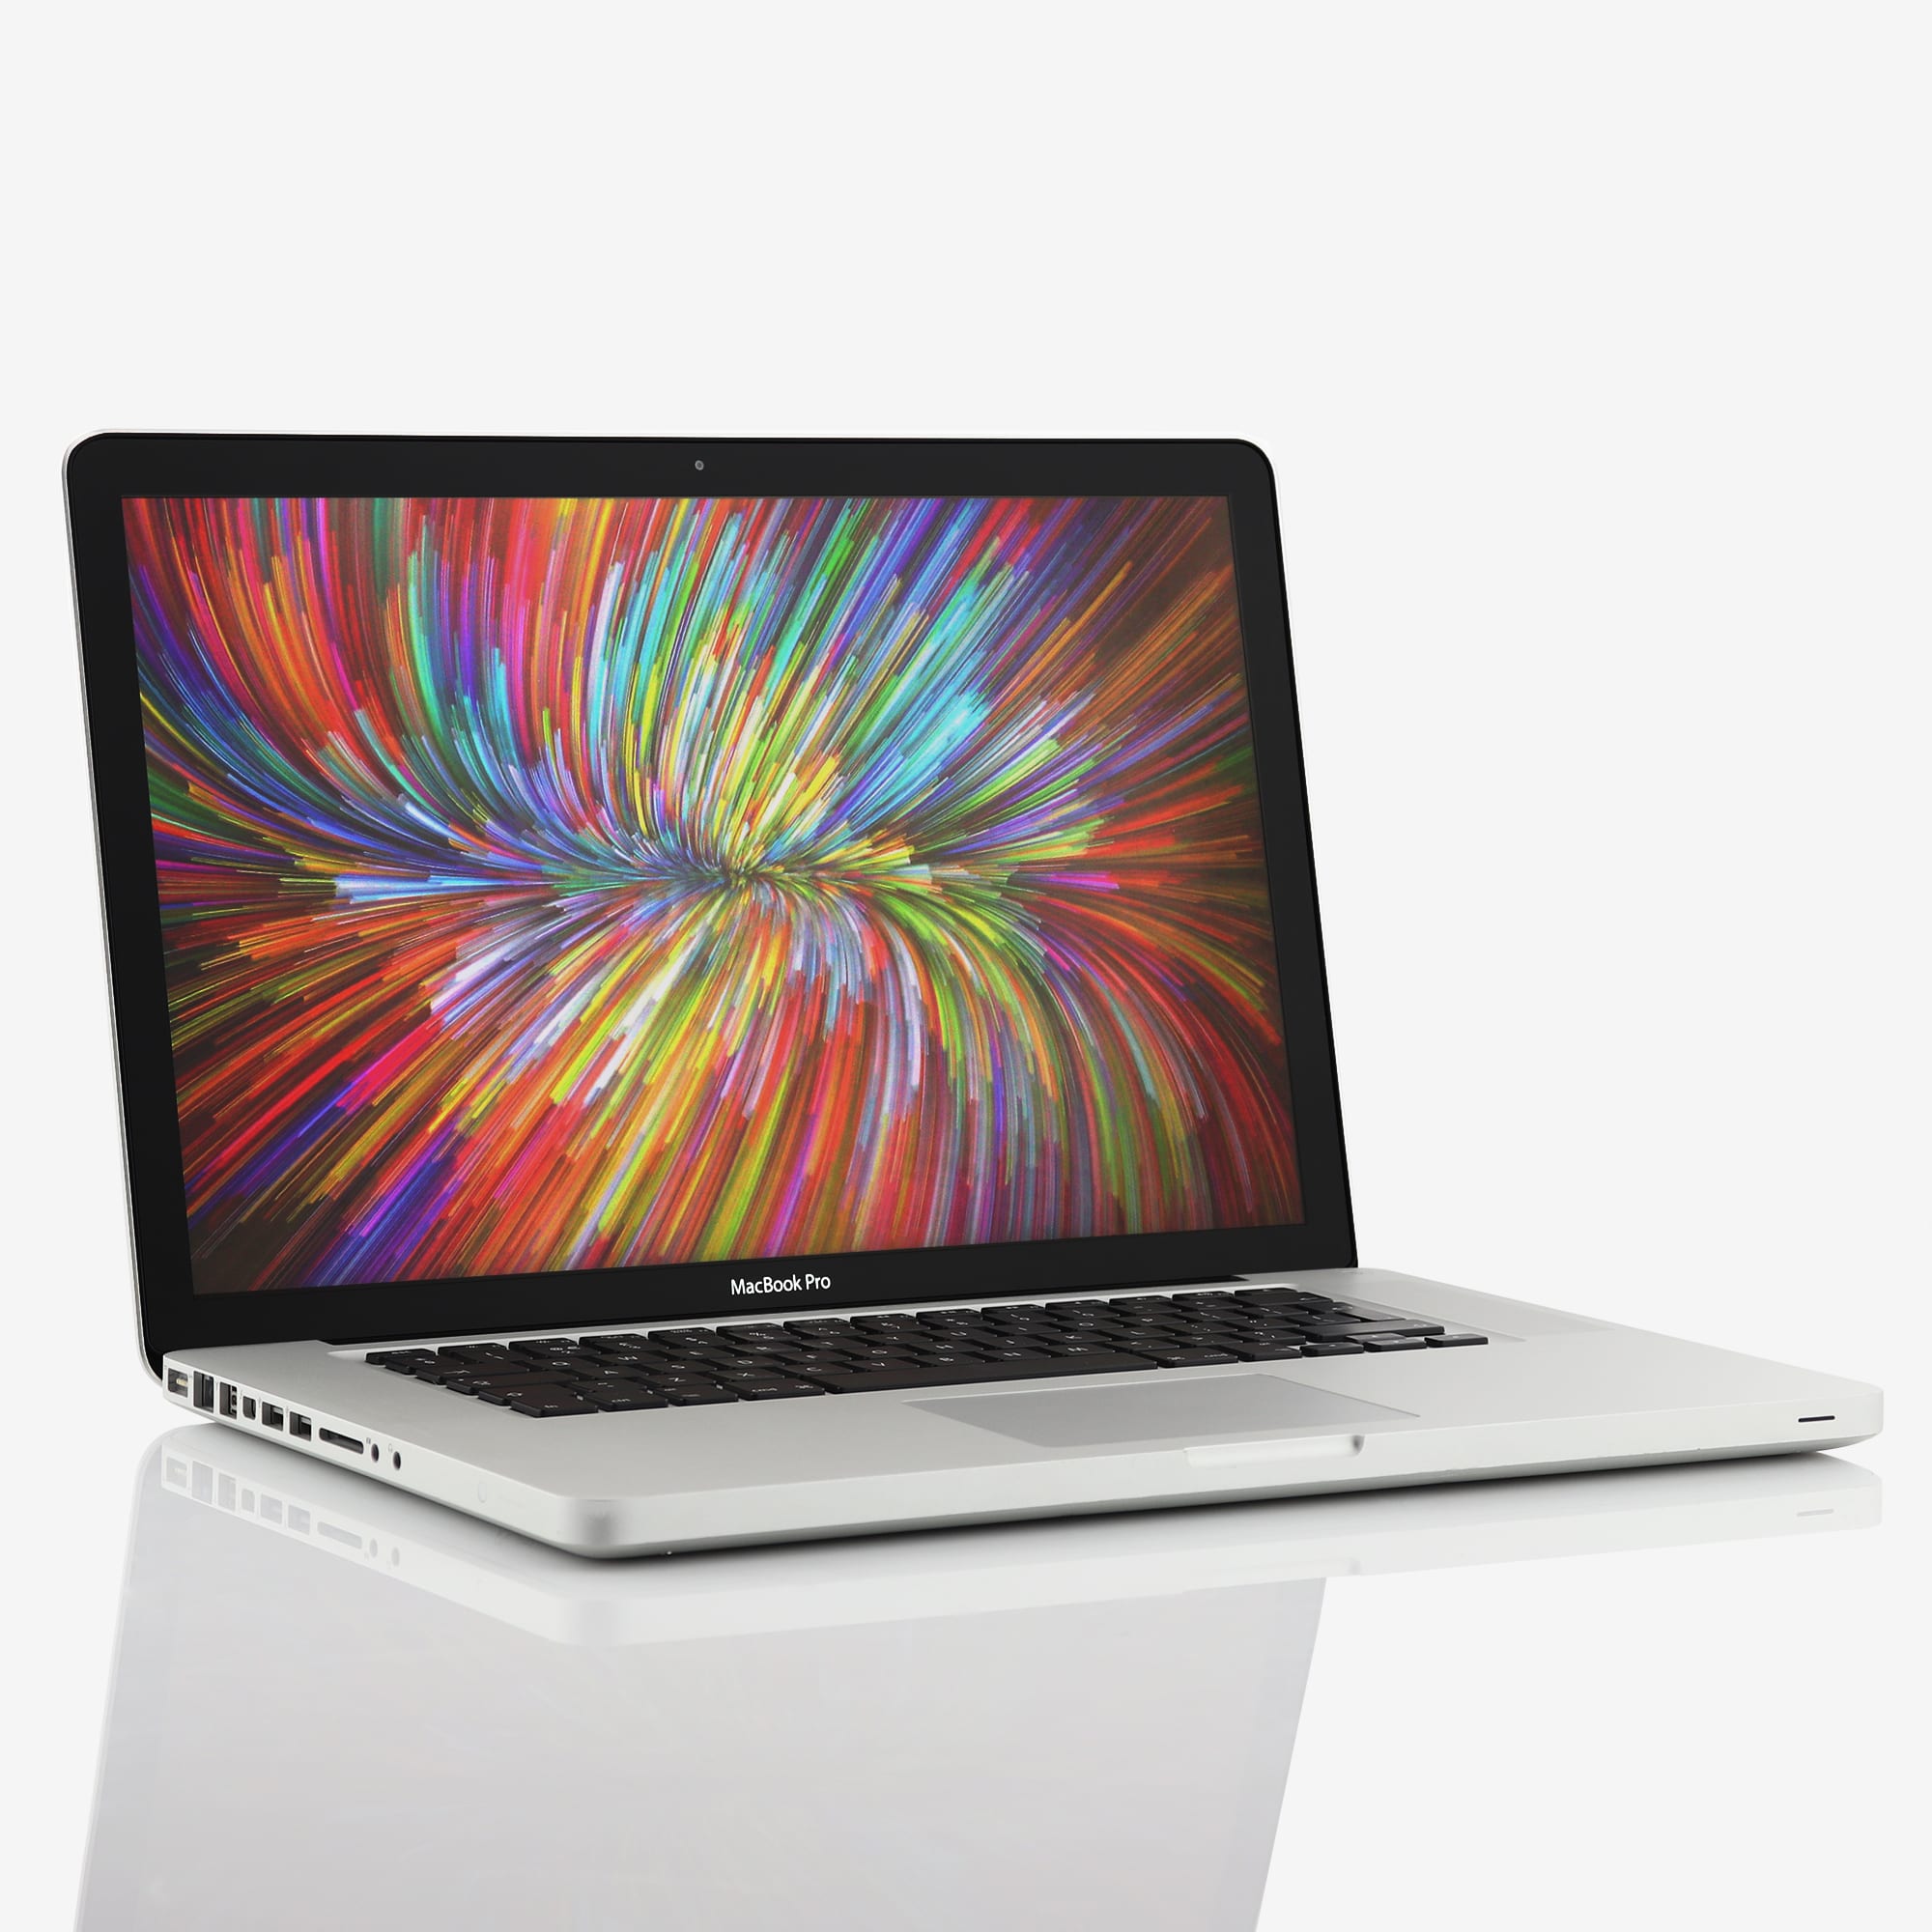 1 x Apple MacBook Pro 15 Inch Quad-Core i7 2.40 GHz (2011)